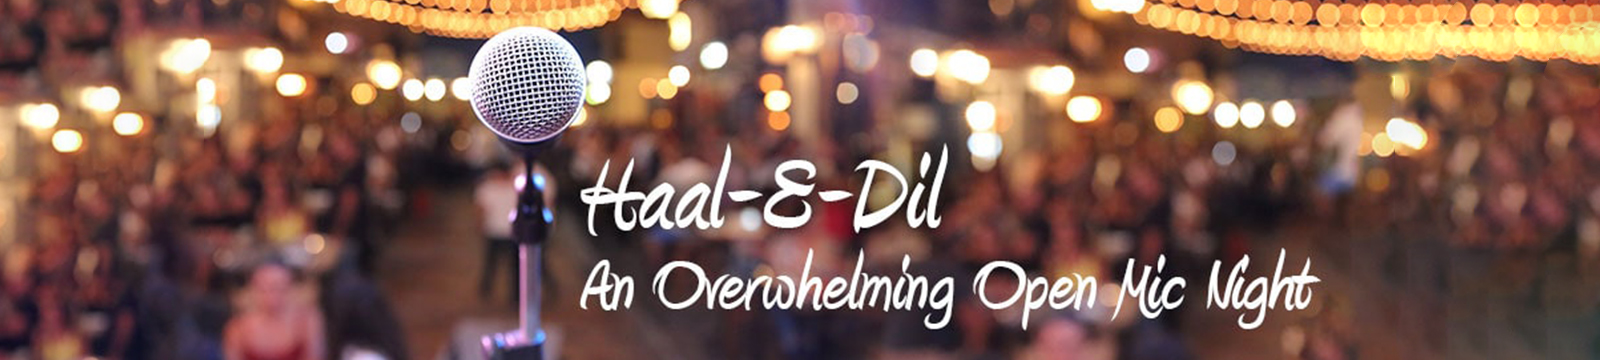 Haal-E-Dil – An Overwhelming Open Mic Night